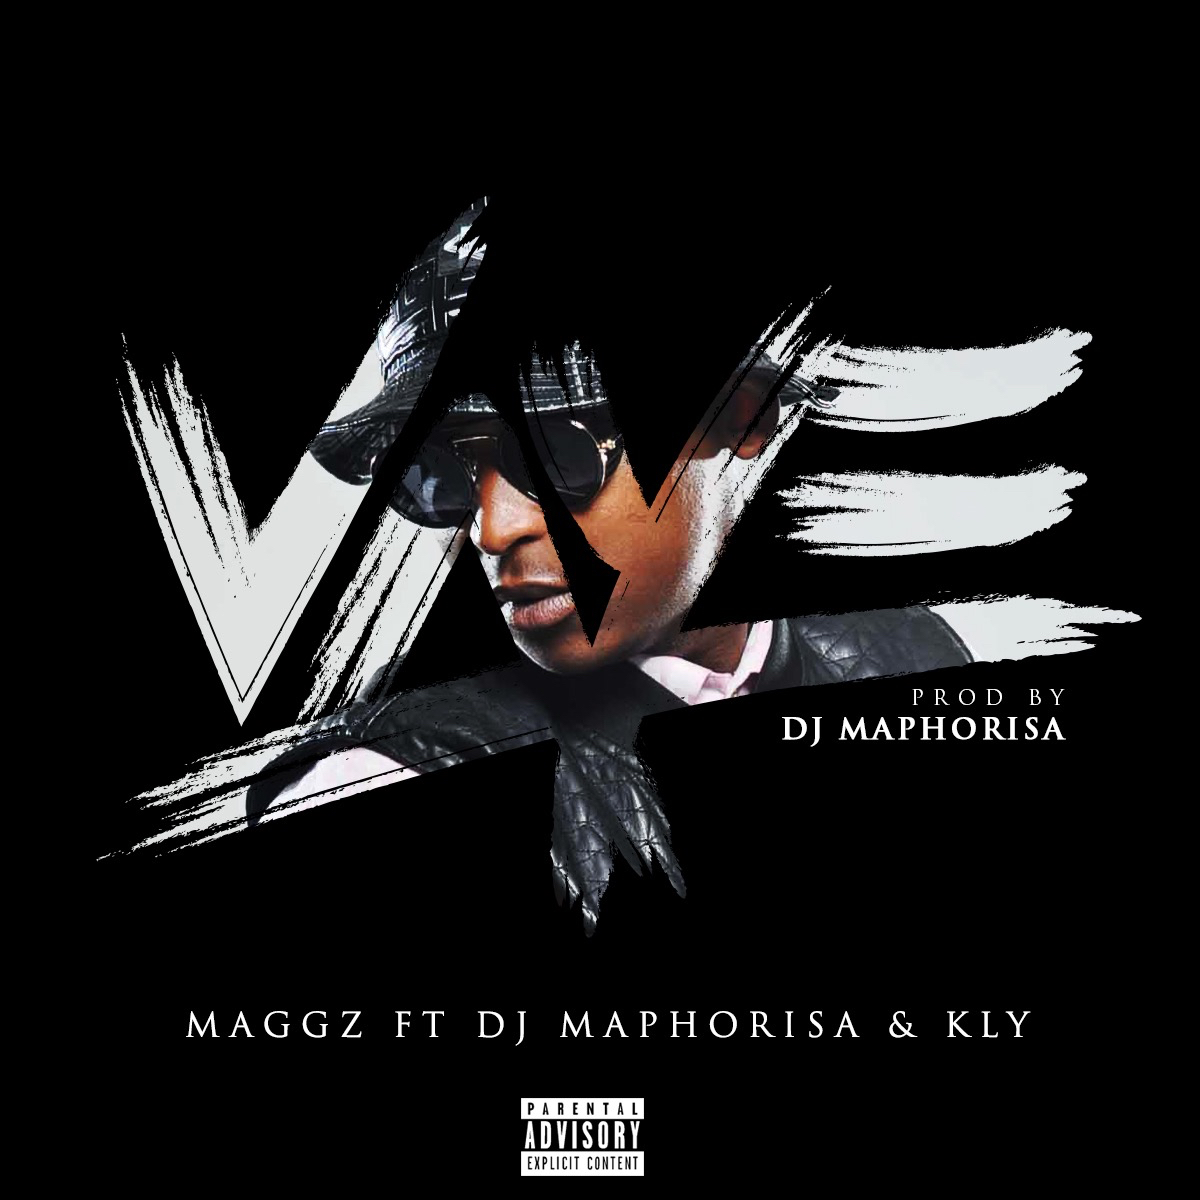 New Music: Maggz debuts ‘Vaye’ featuring DJ Maphorisa & Kly